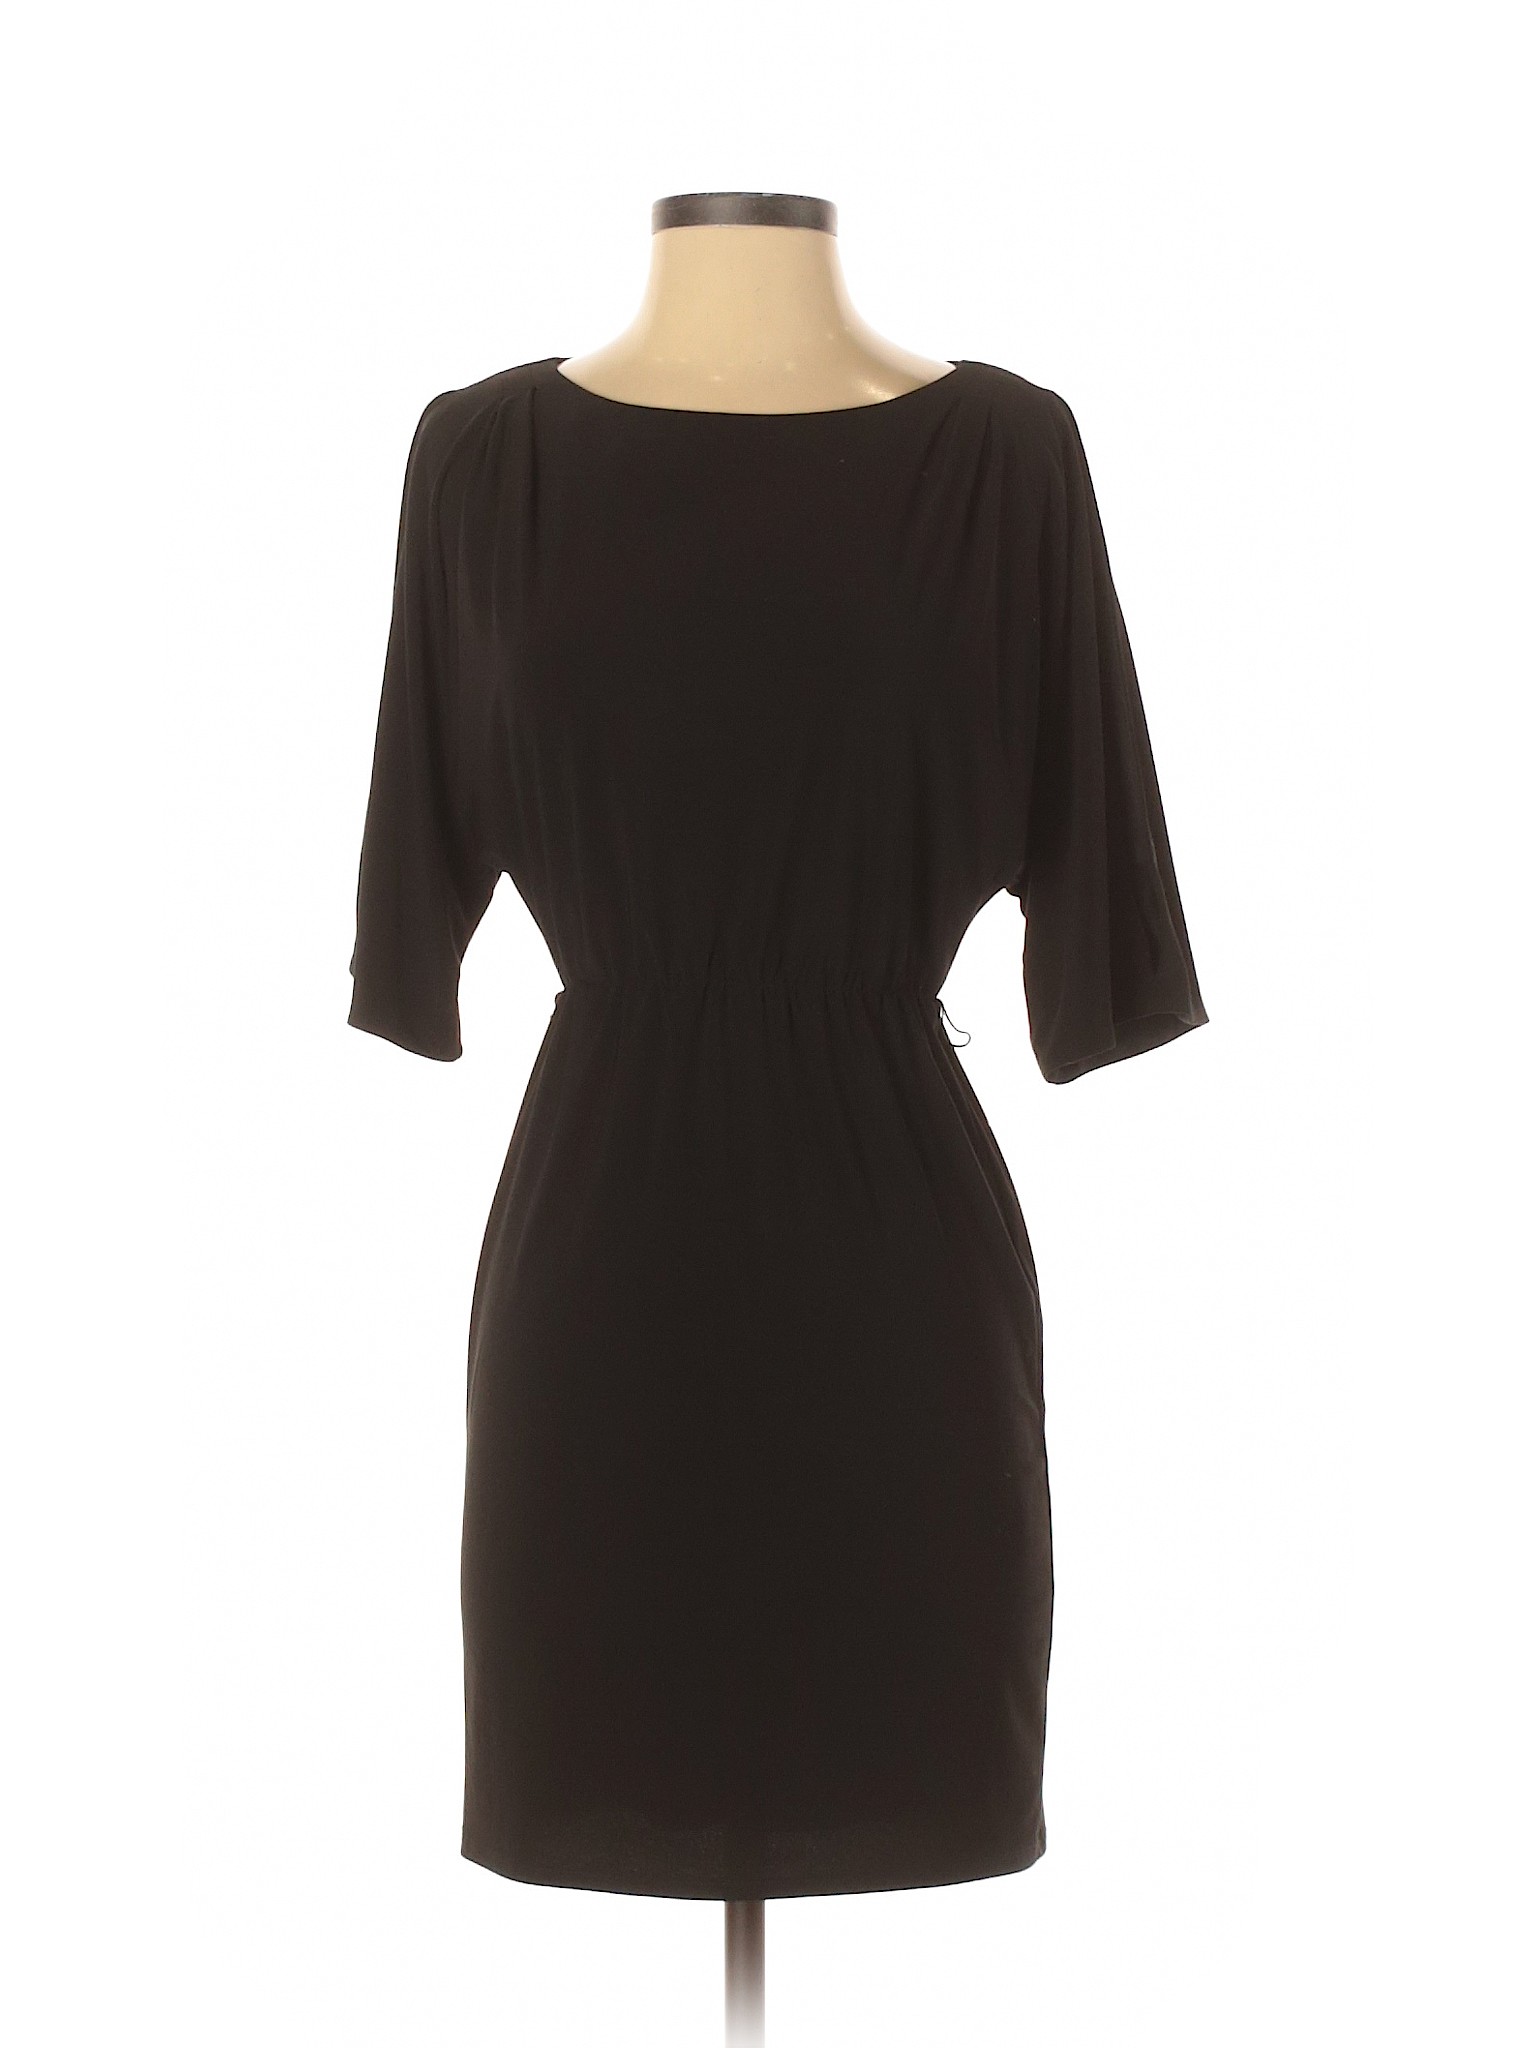 Jessica Simpson Women Black Cocktail Dress XS | eBay